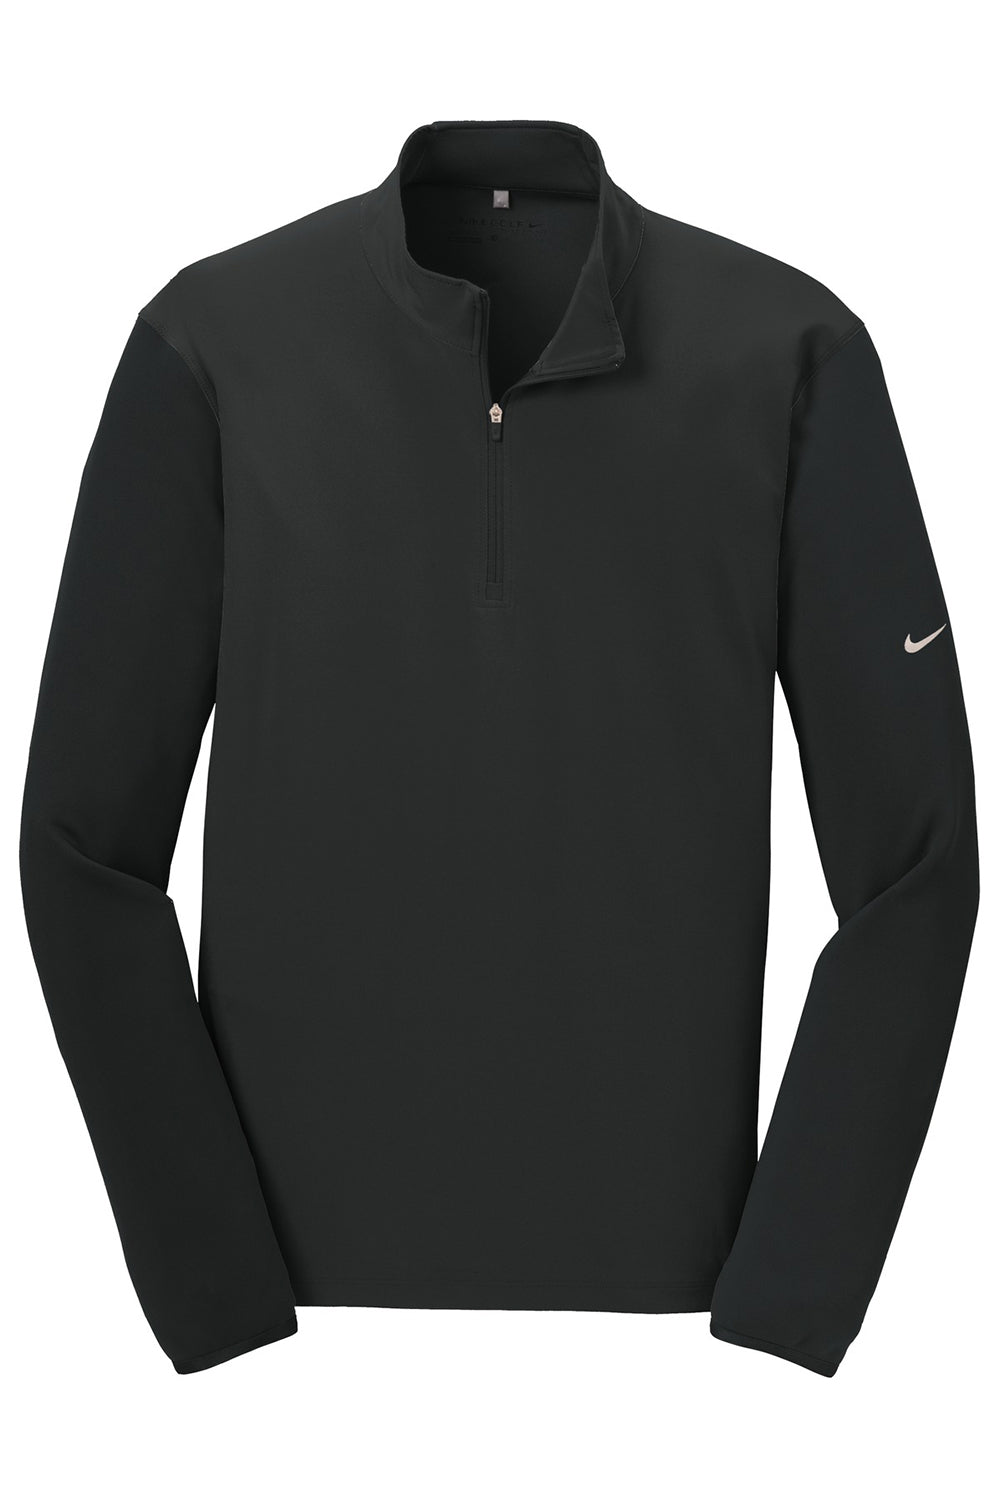 Nike 746102 Mens Dri-Fit Moisture Wicking 1/4 Zip Sweatshirt Black Flat Front